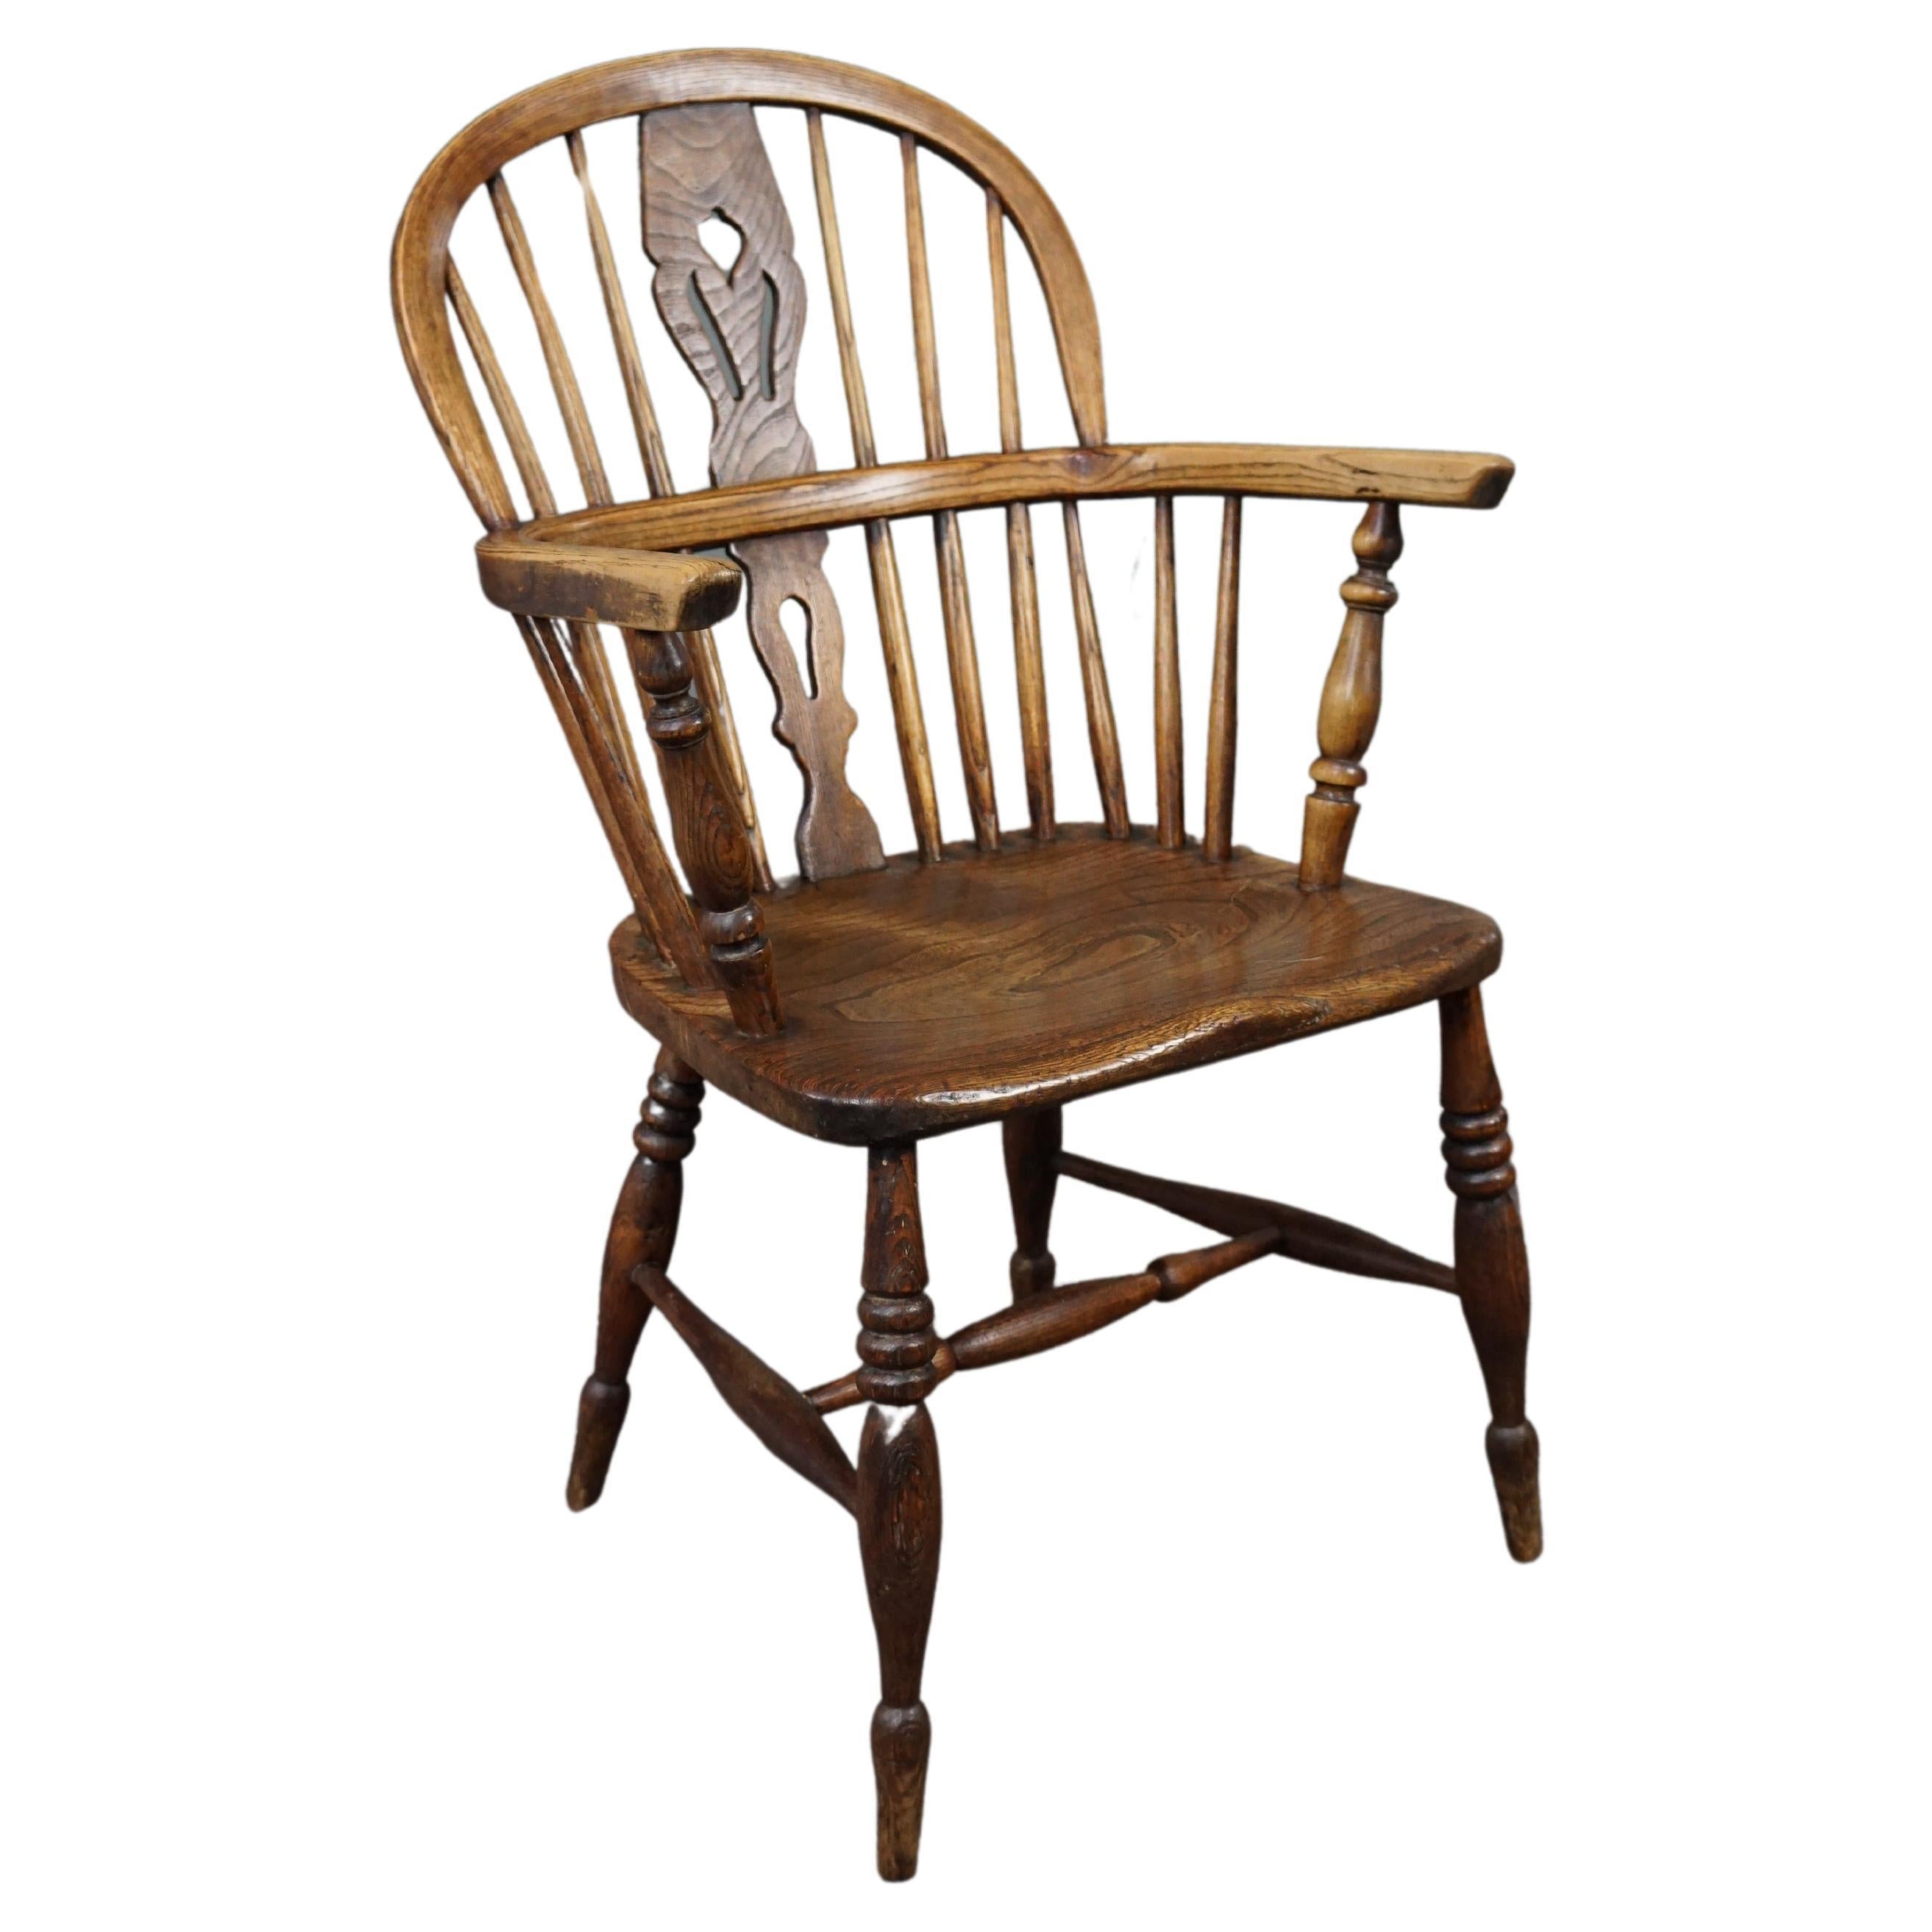 Fauteuil/chaise Windsor anglais ancien, à dossier bas, XVIIIe siècle